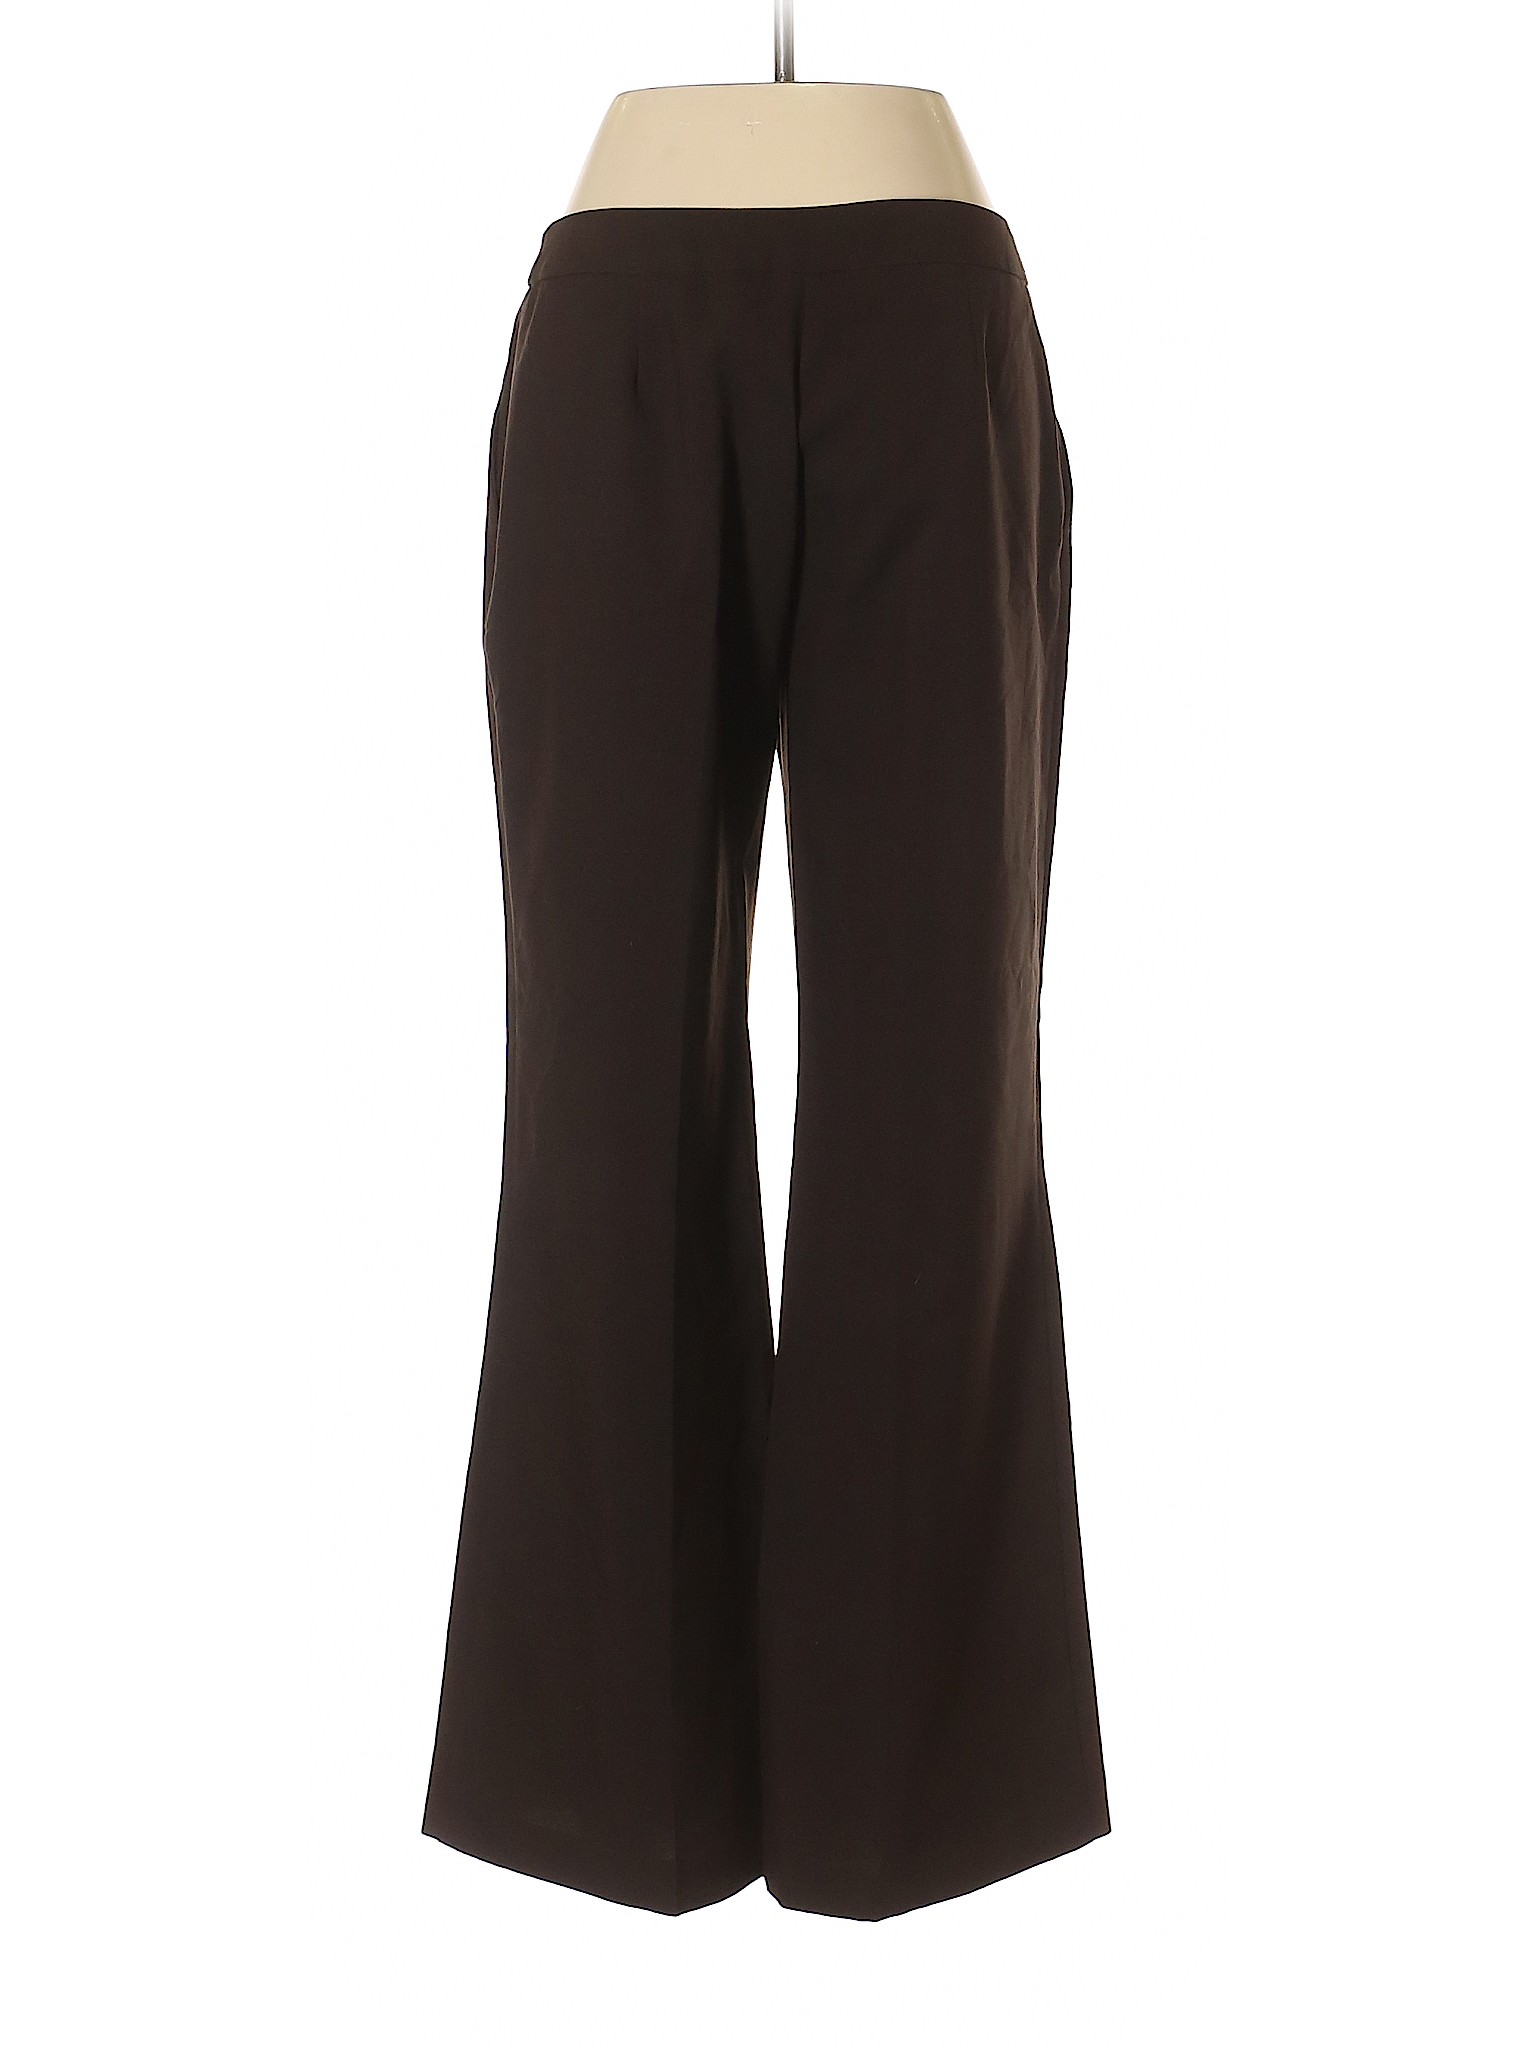 New York & Company Women Brown Dress Pants 4 | eBay